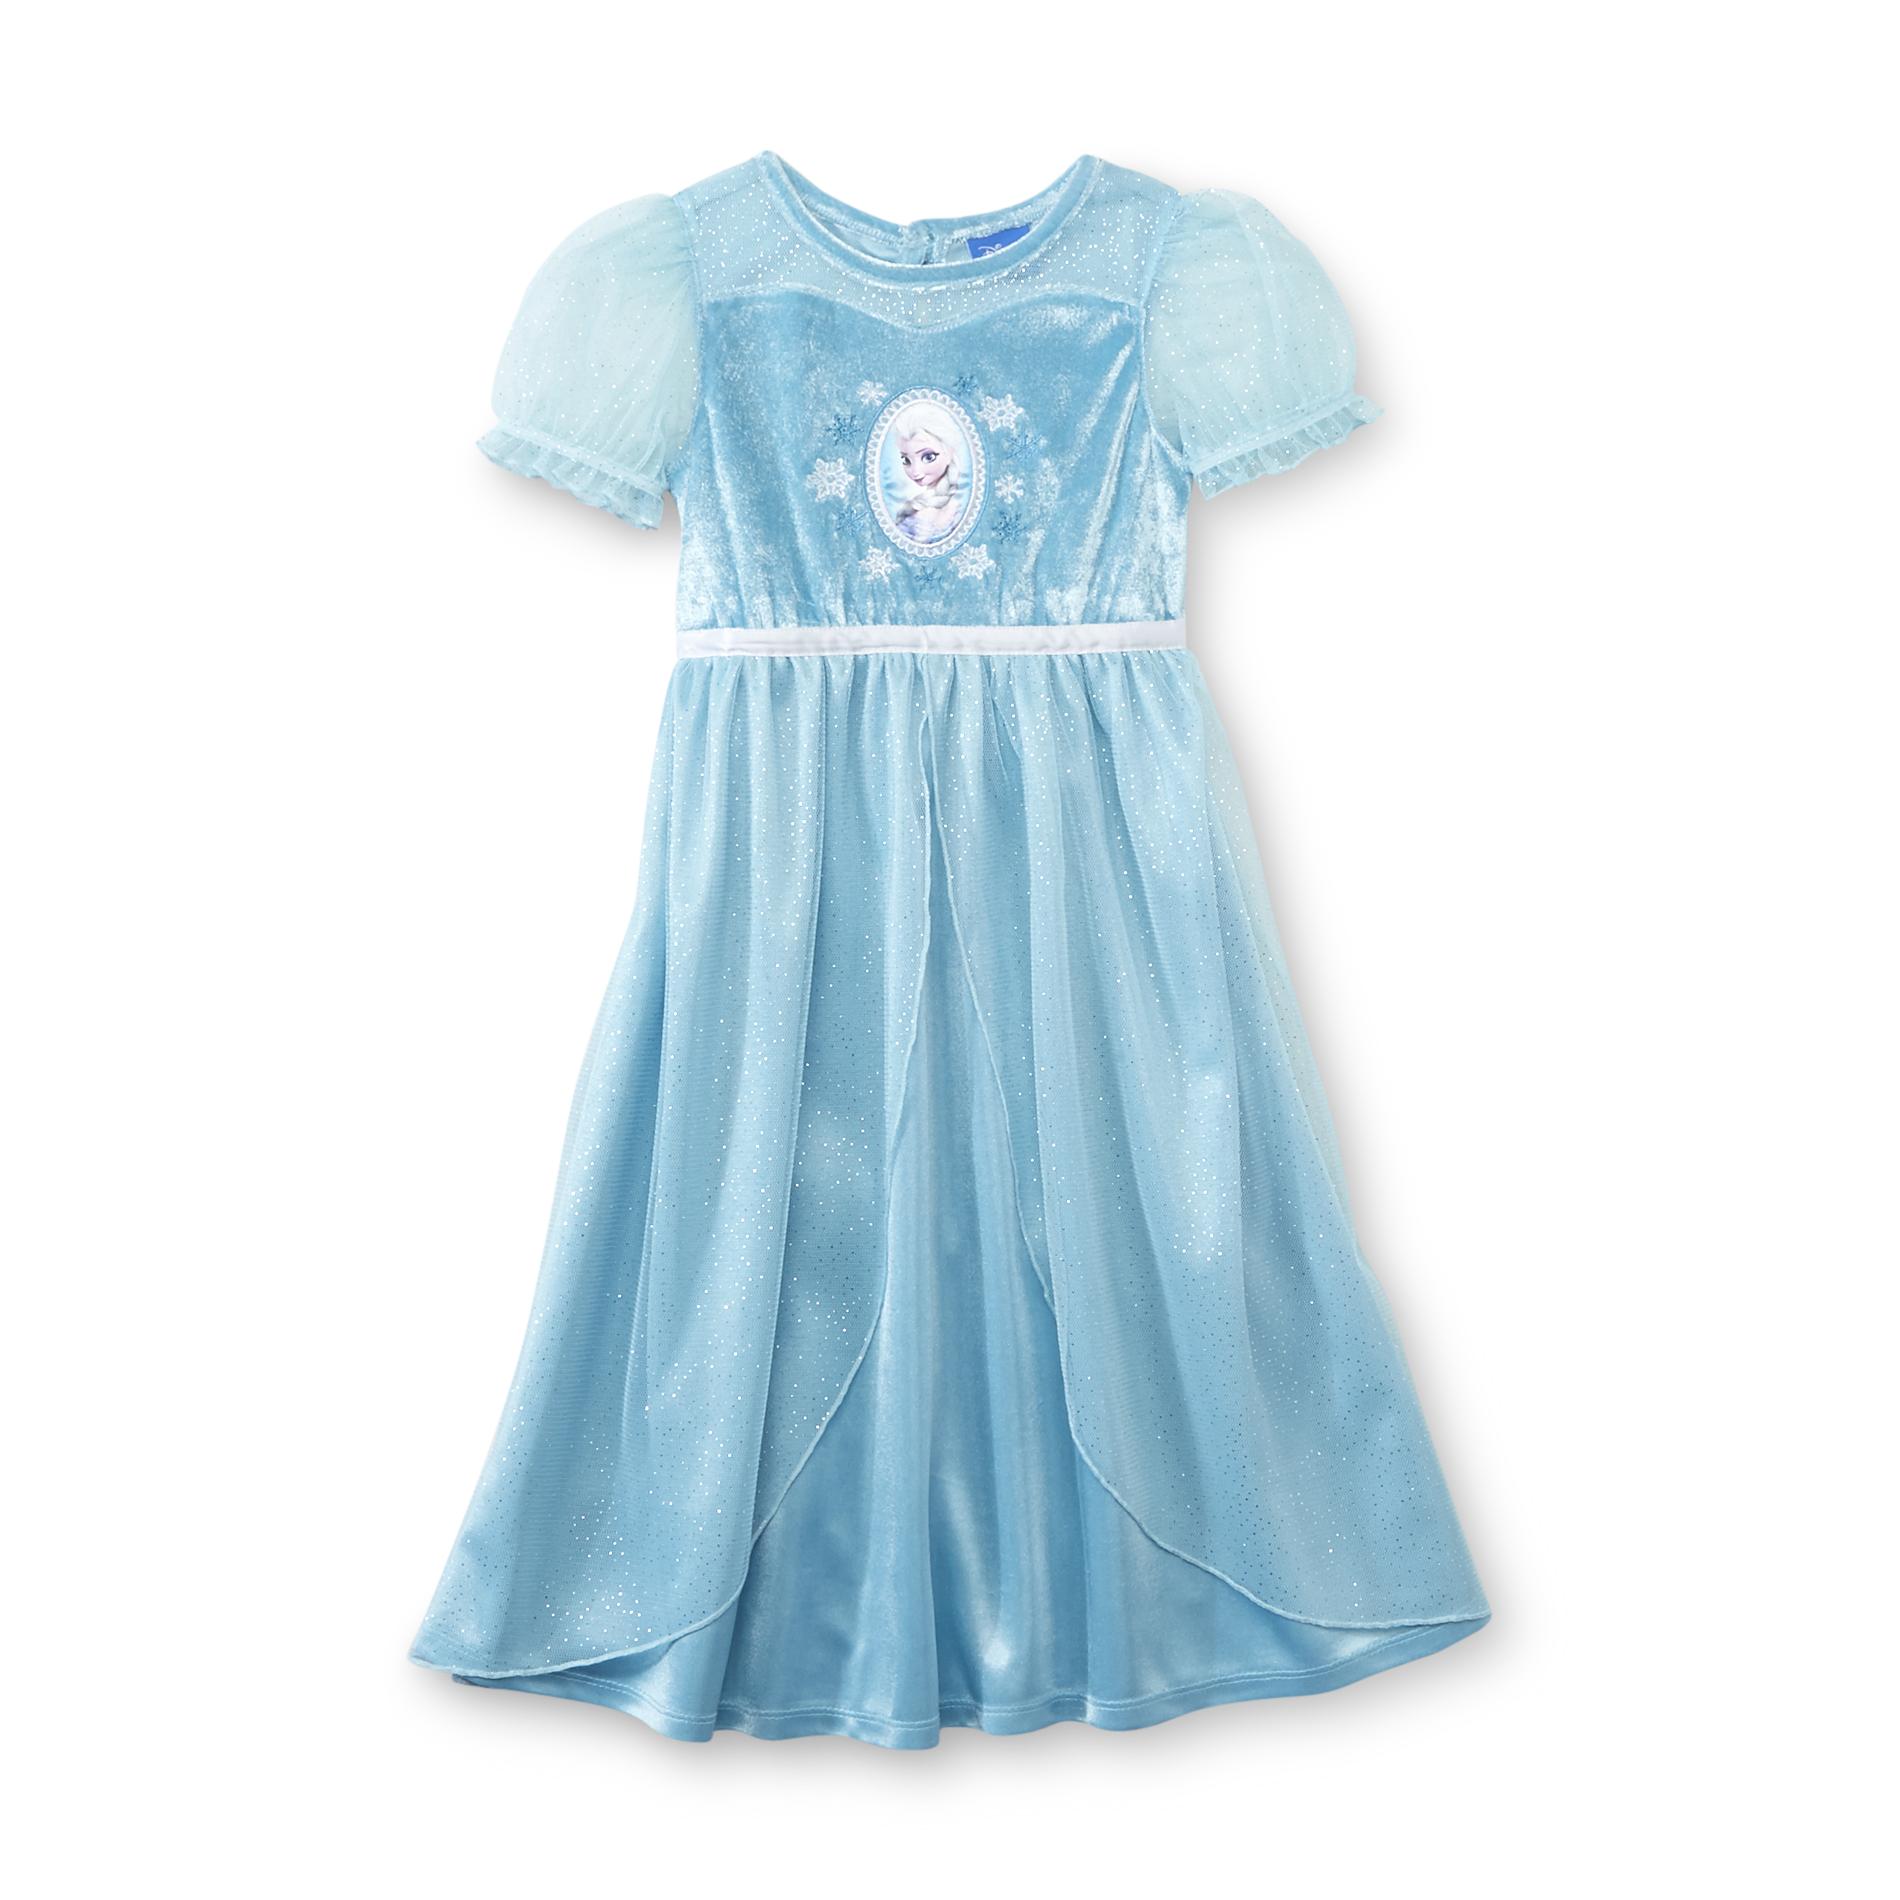 Disney Frozen Toddler Girl's Nightgown - Elsa